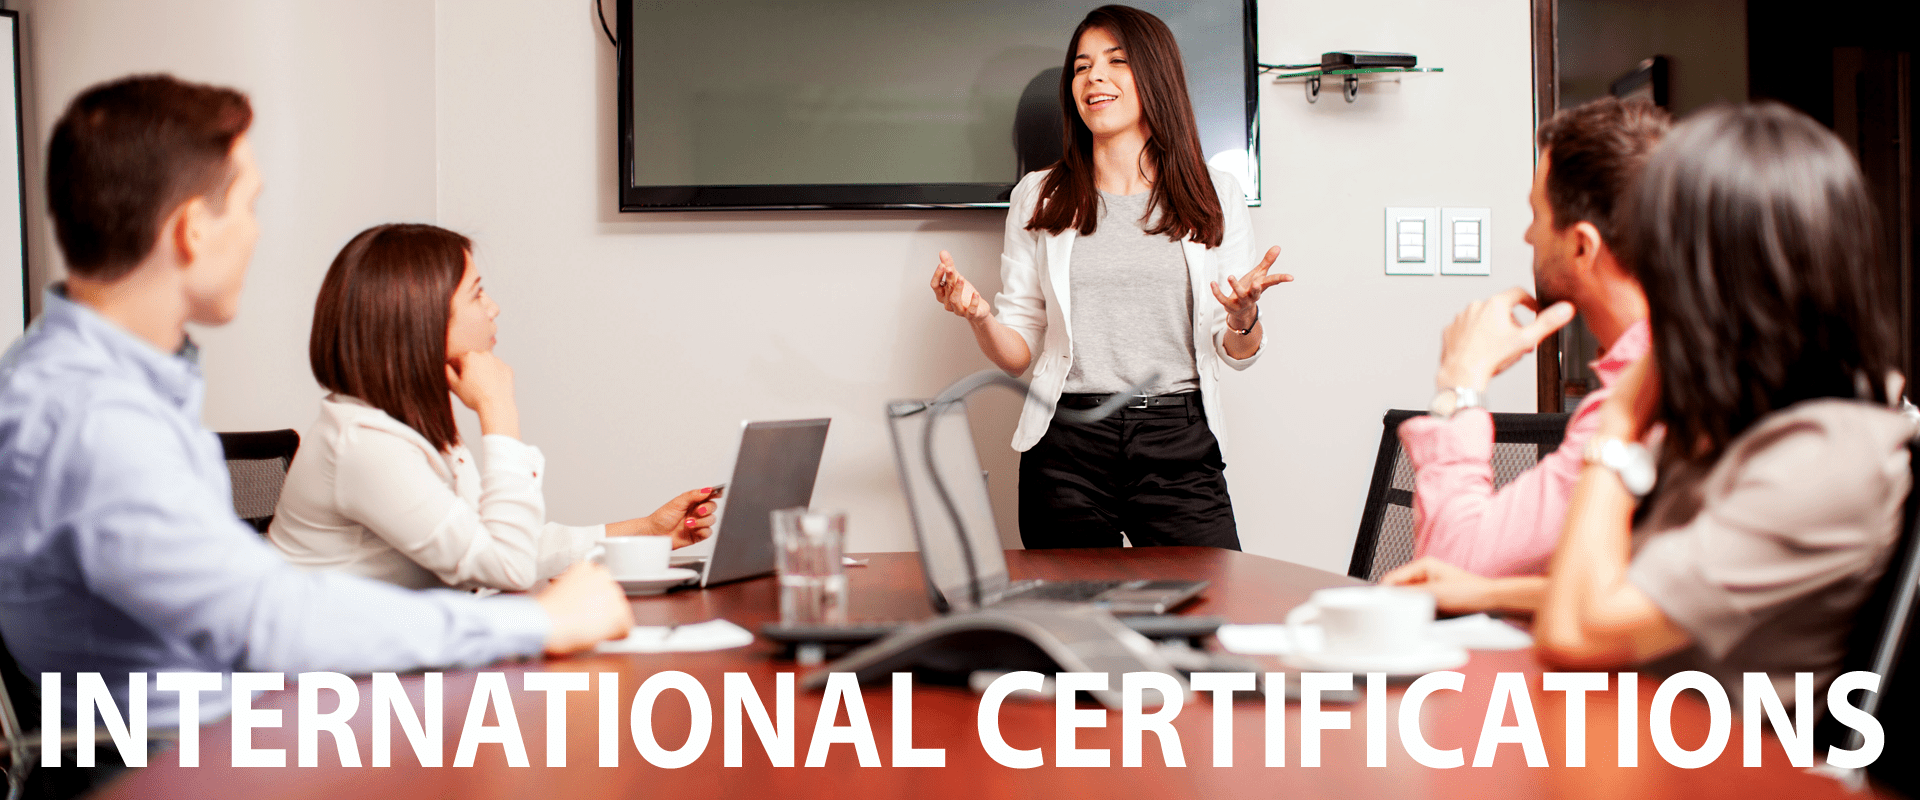 international_certifications